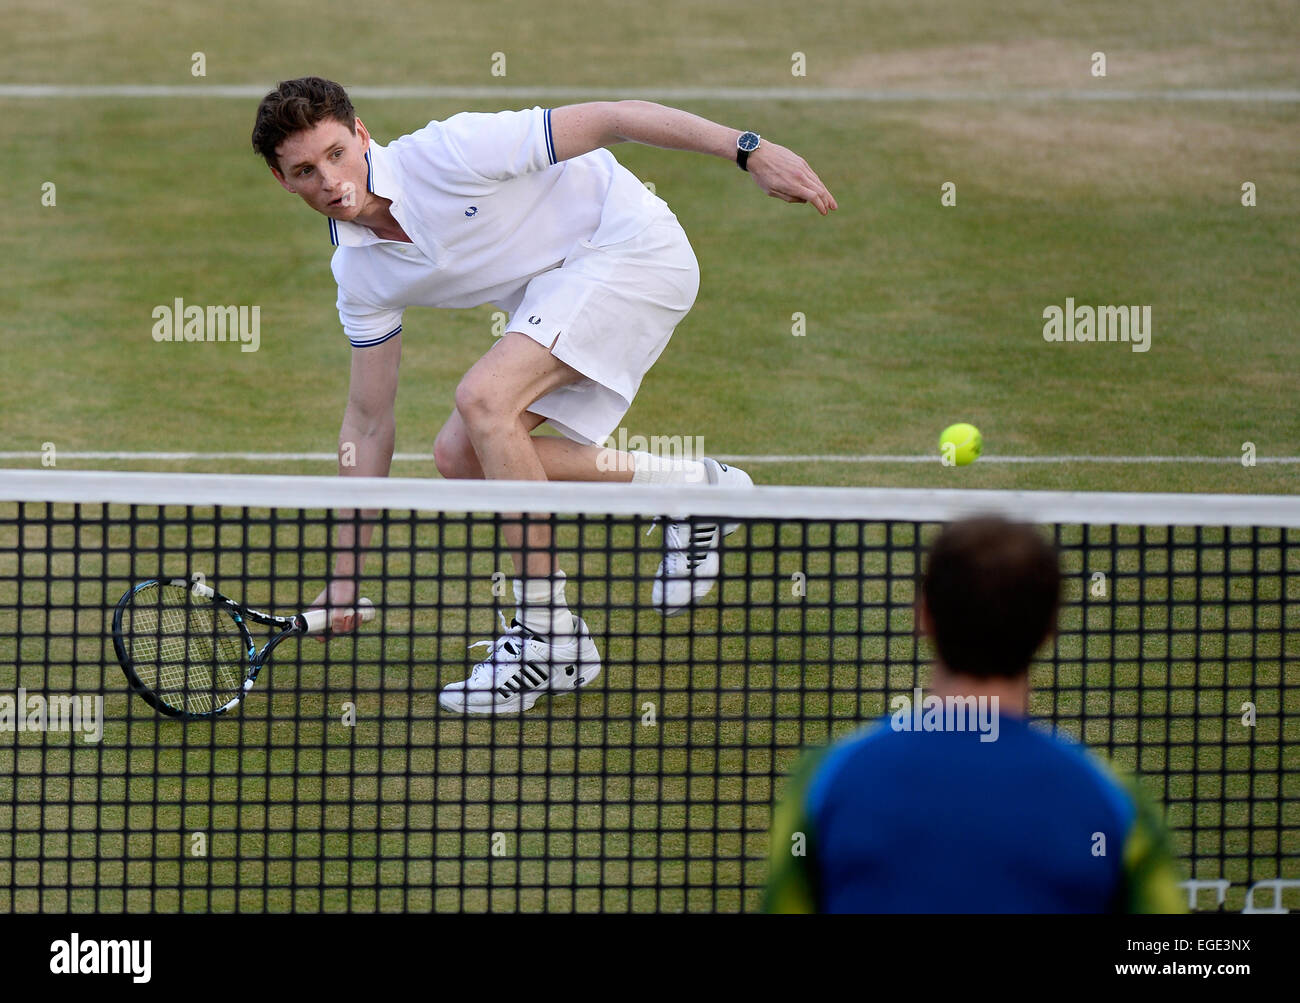 Attore Eddie Redmayne gioca tennis durante un match di beneficenza a Queen's Club di Londra 2013. Redmayne recentemente ha vinto un Oscar nel 2015. Foto Stock